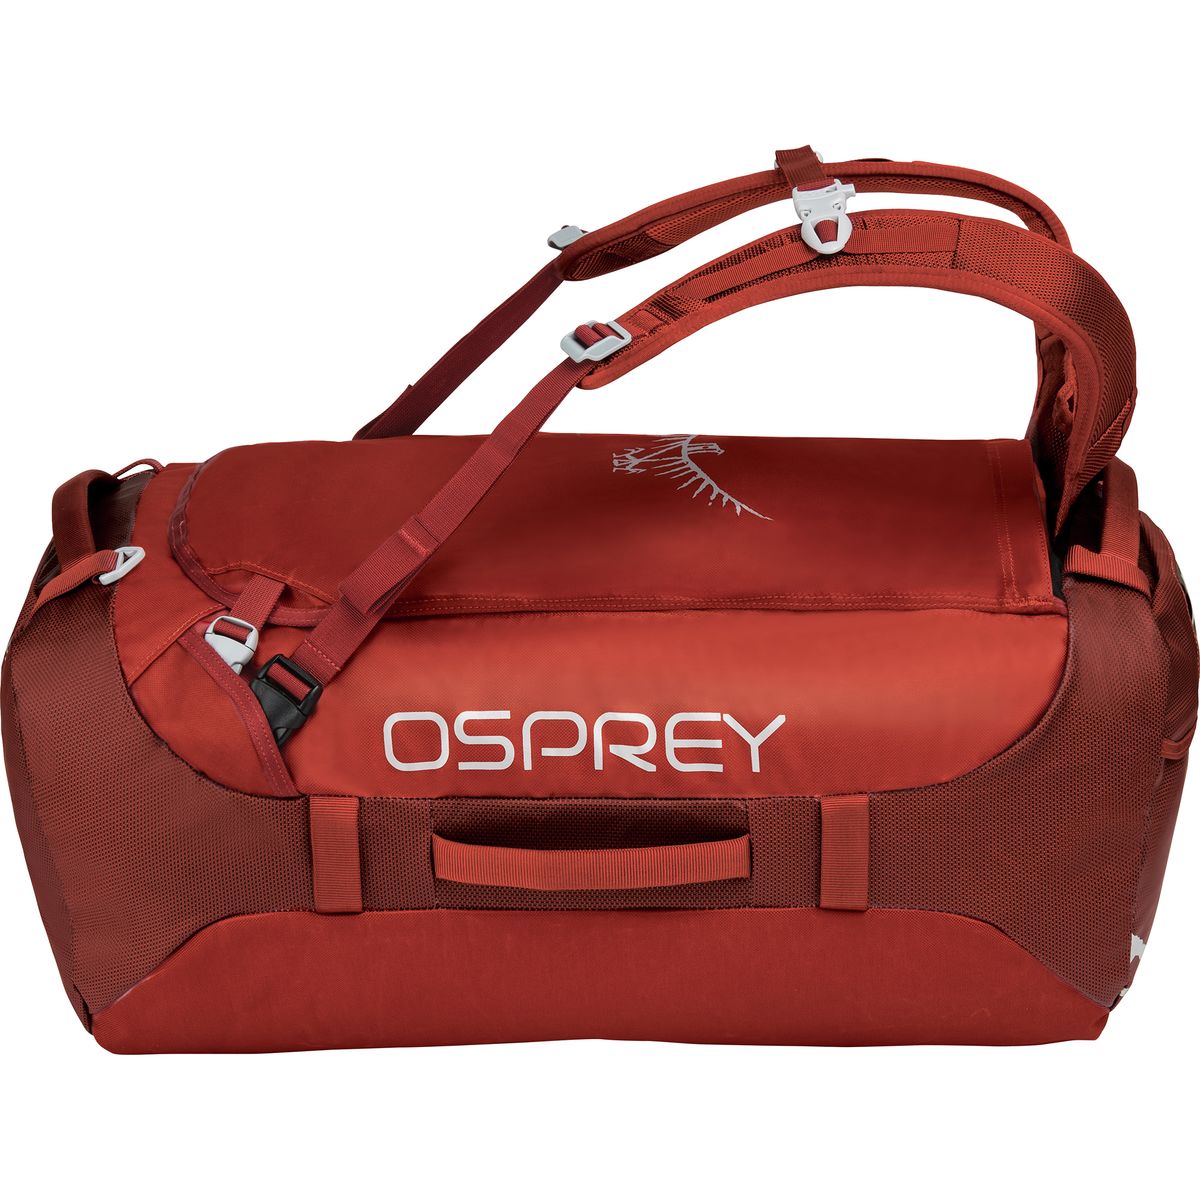 Osprey Packs Transporter 65L Duffel | Backcountry.com